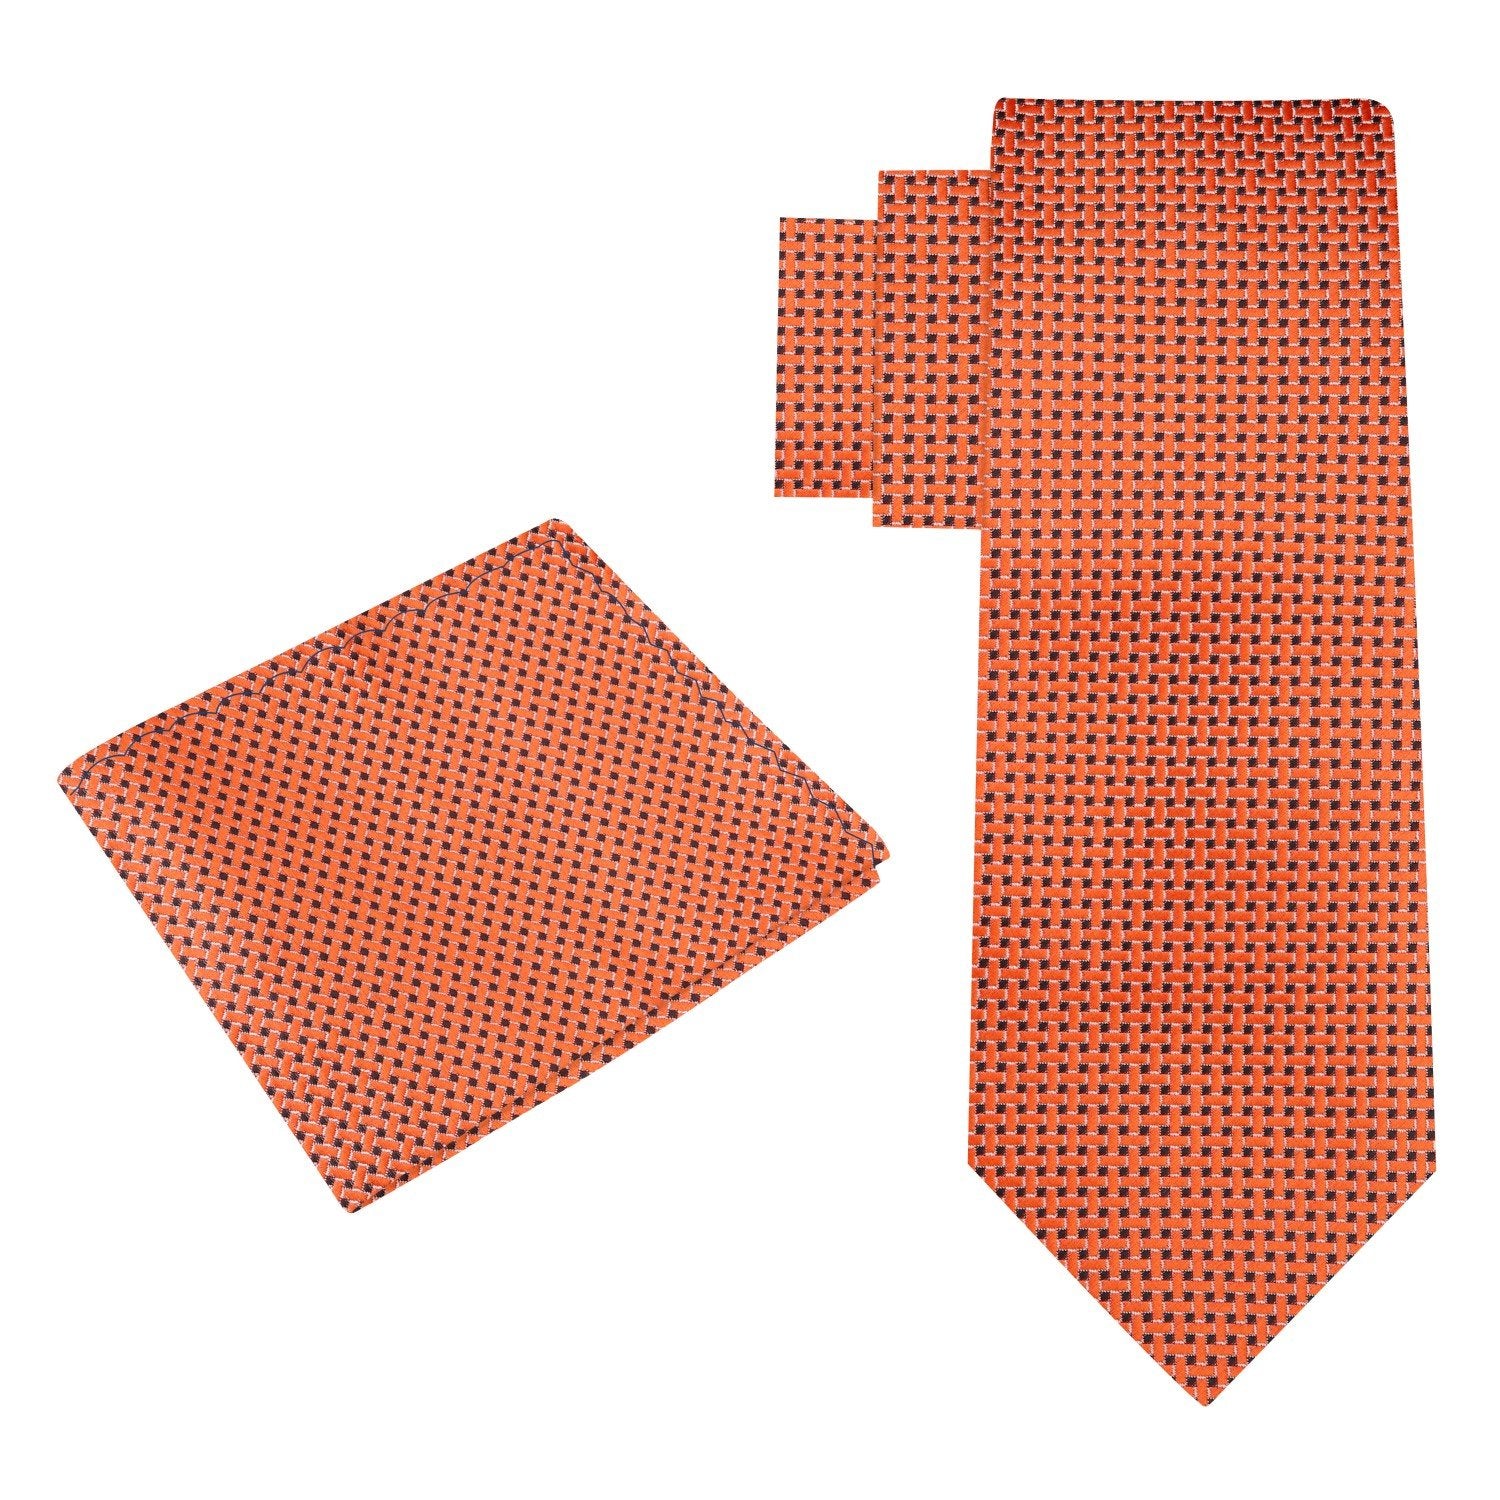 Alt View: Rugged Orange, Black Geometric Tie and Pocket Square